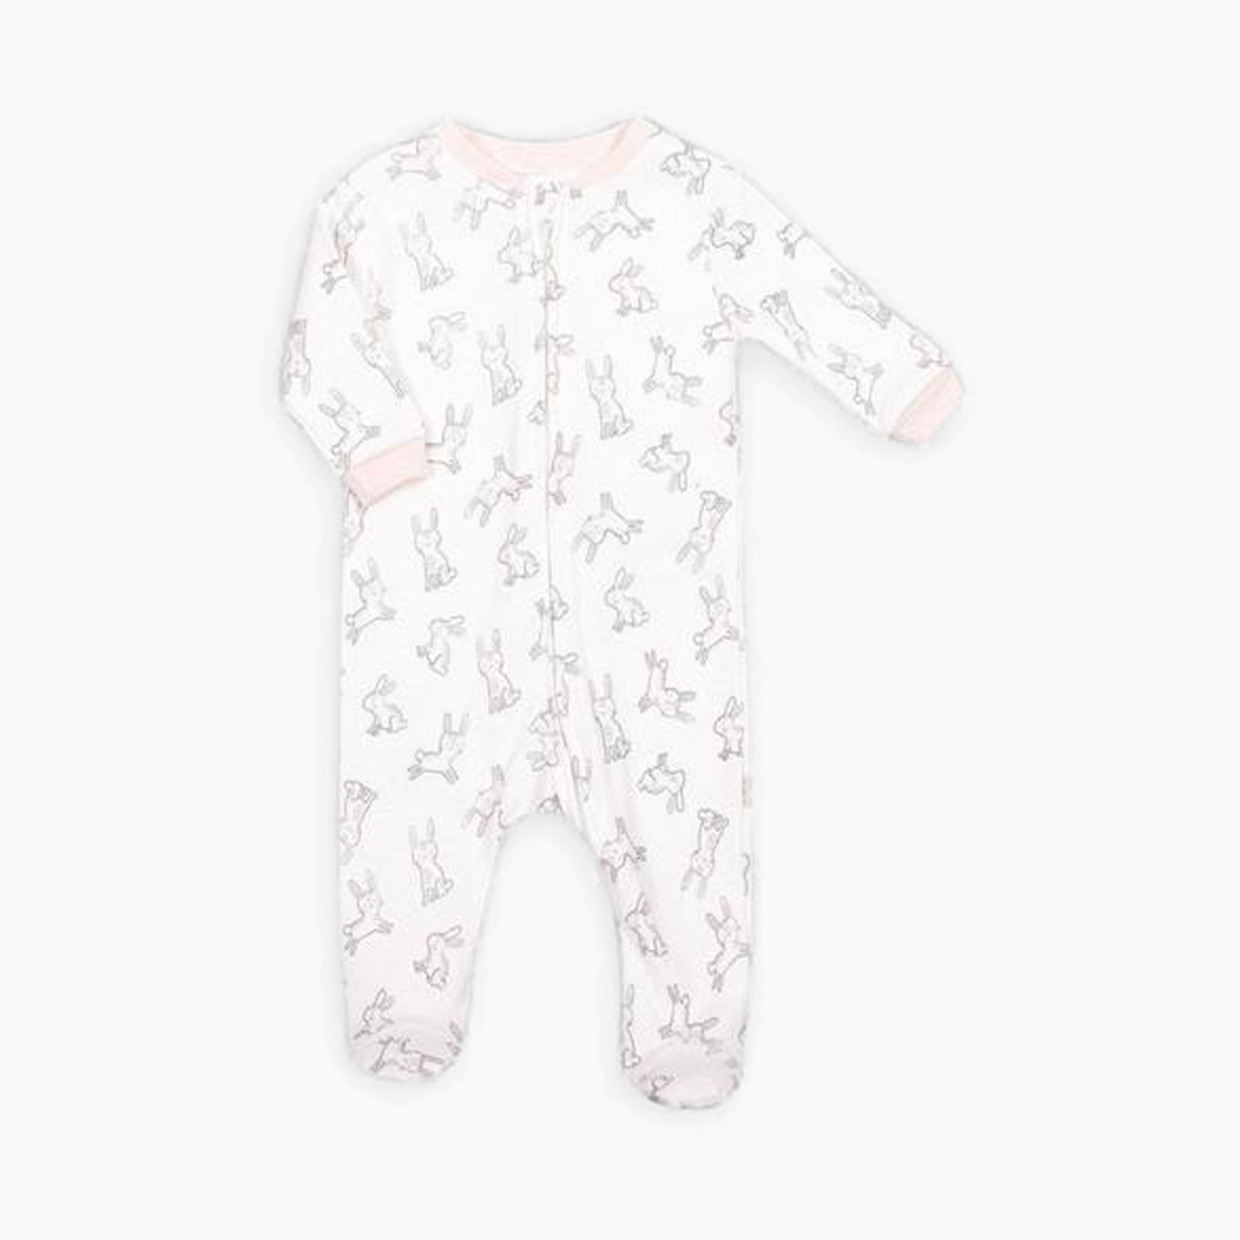 Snugabye Front Zip Sleeper - Pink Bunnies, Newborn.